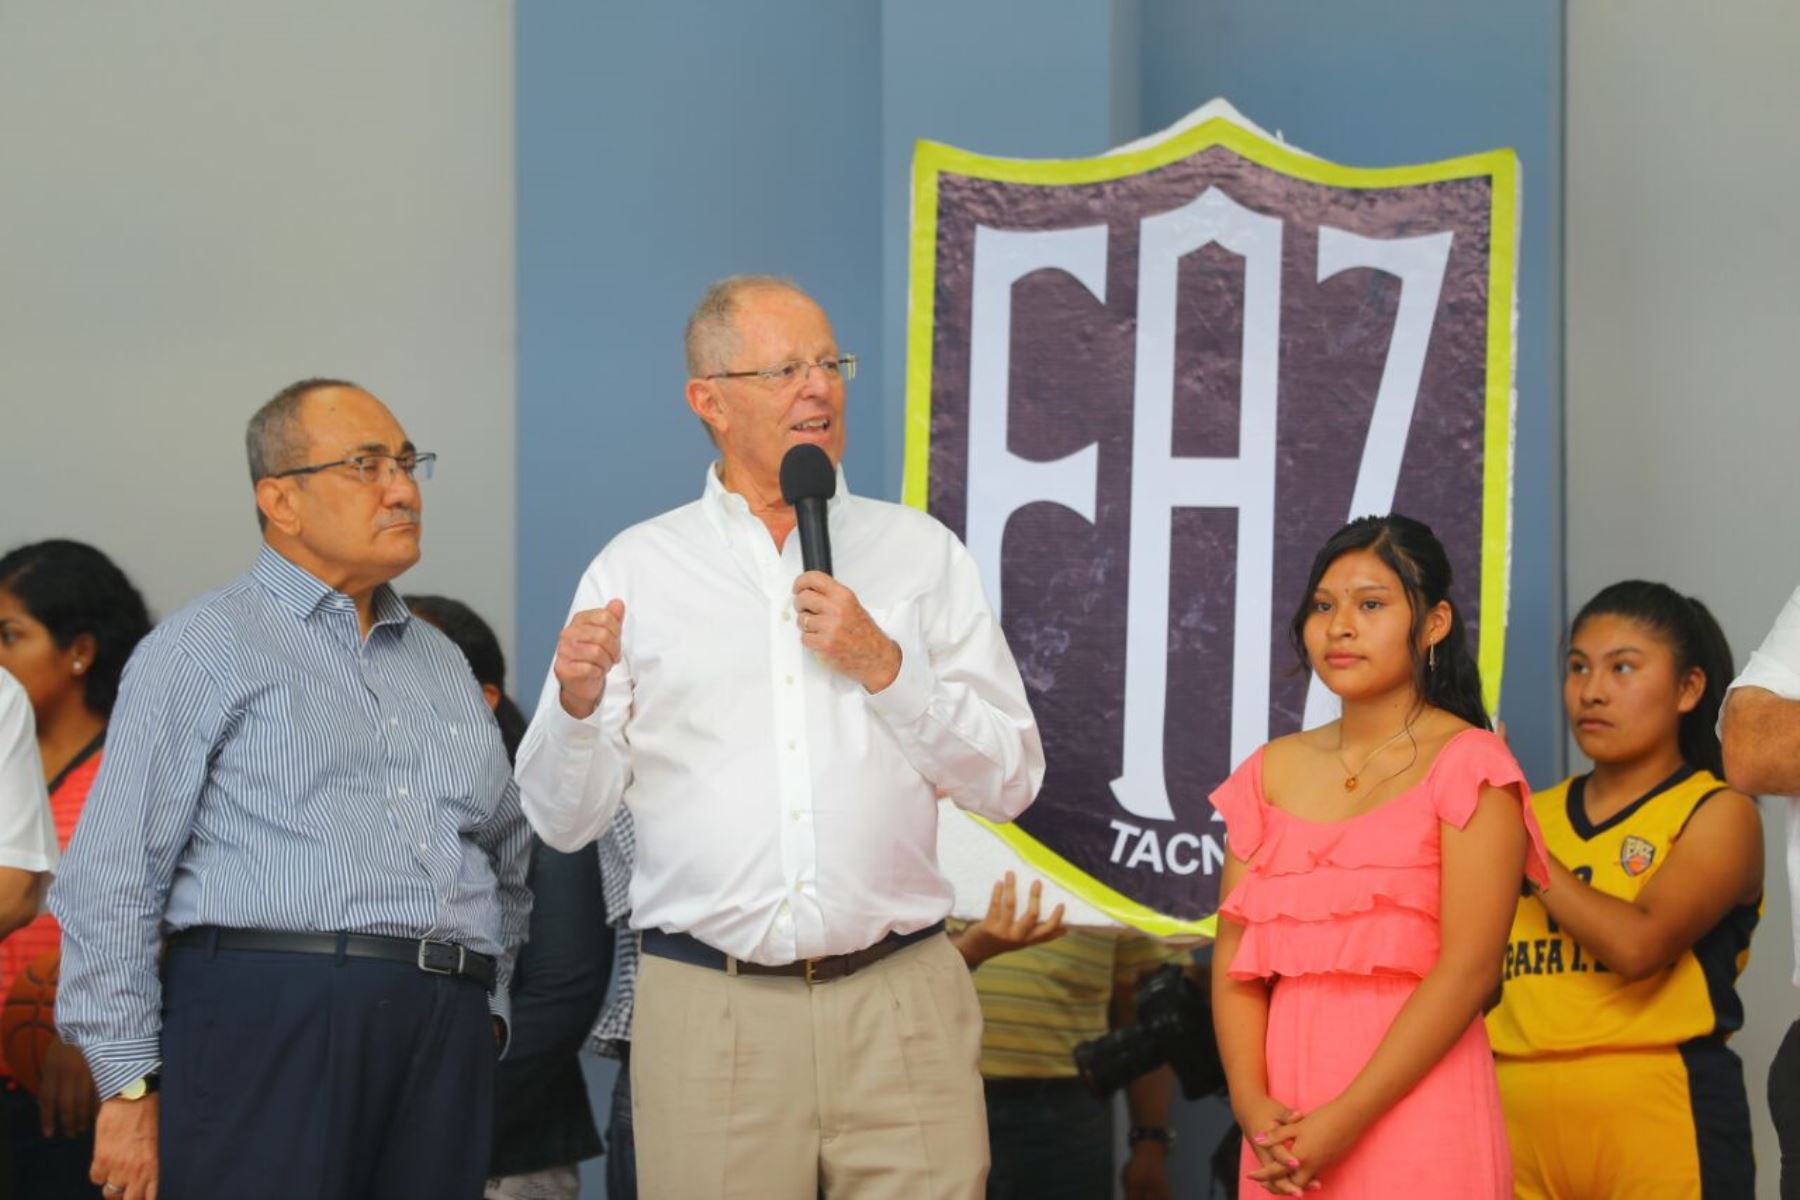 Presidente Kuczynski inaugura la institución educativa Francisco de Zela en Tacna. Foto: ANDINA/Prensa Presidencia